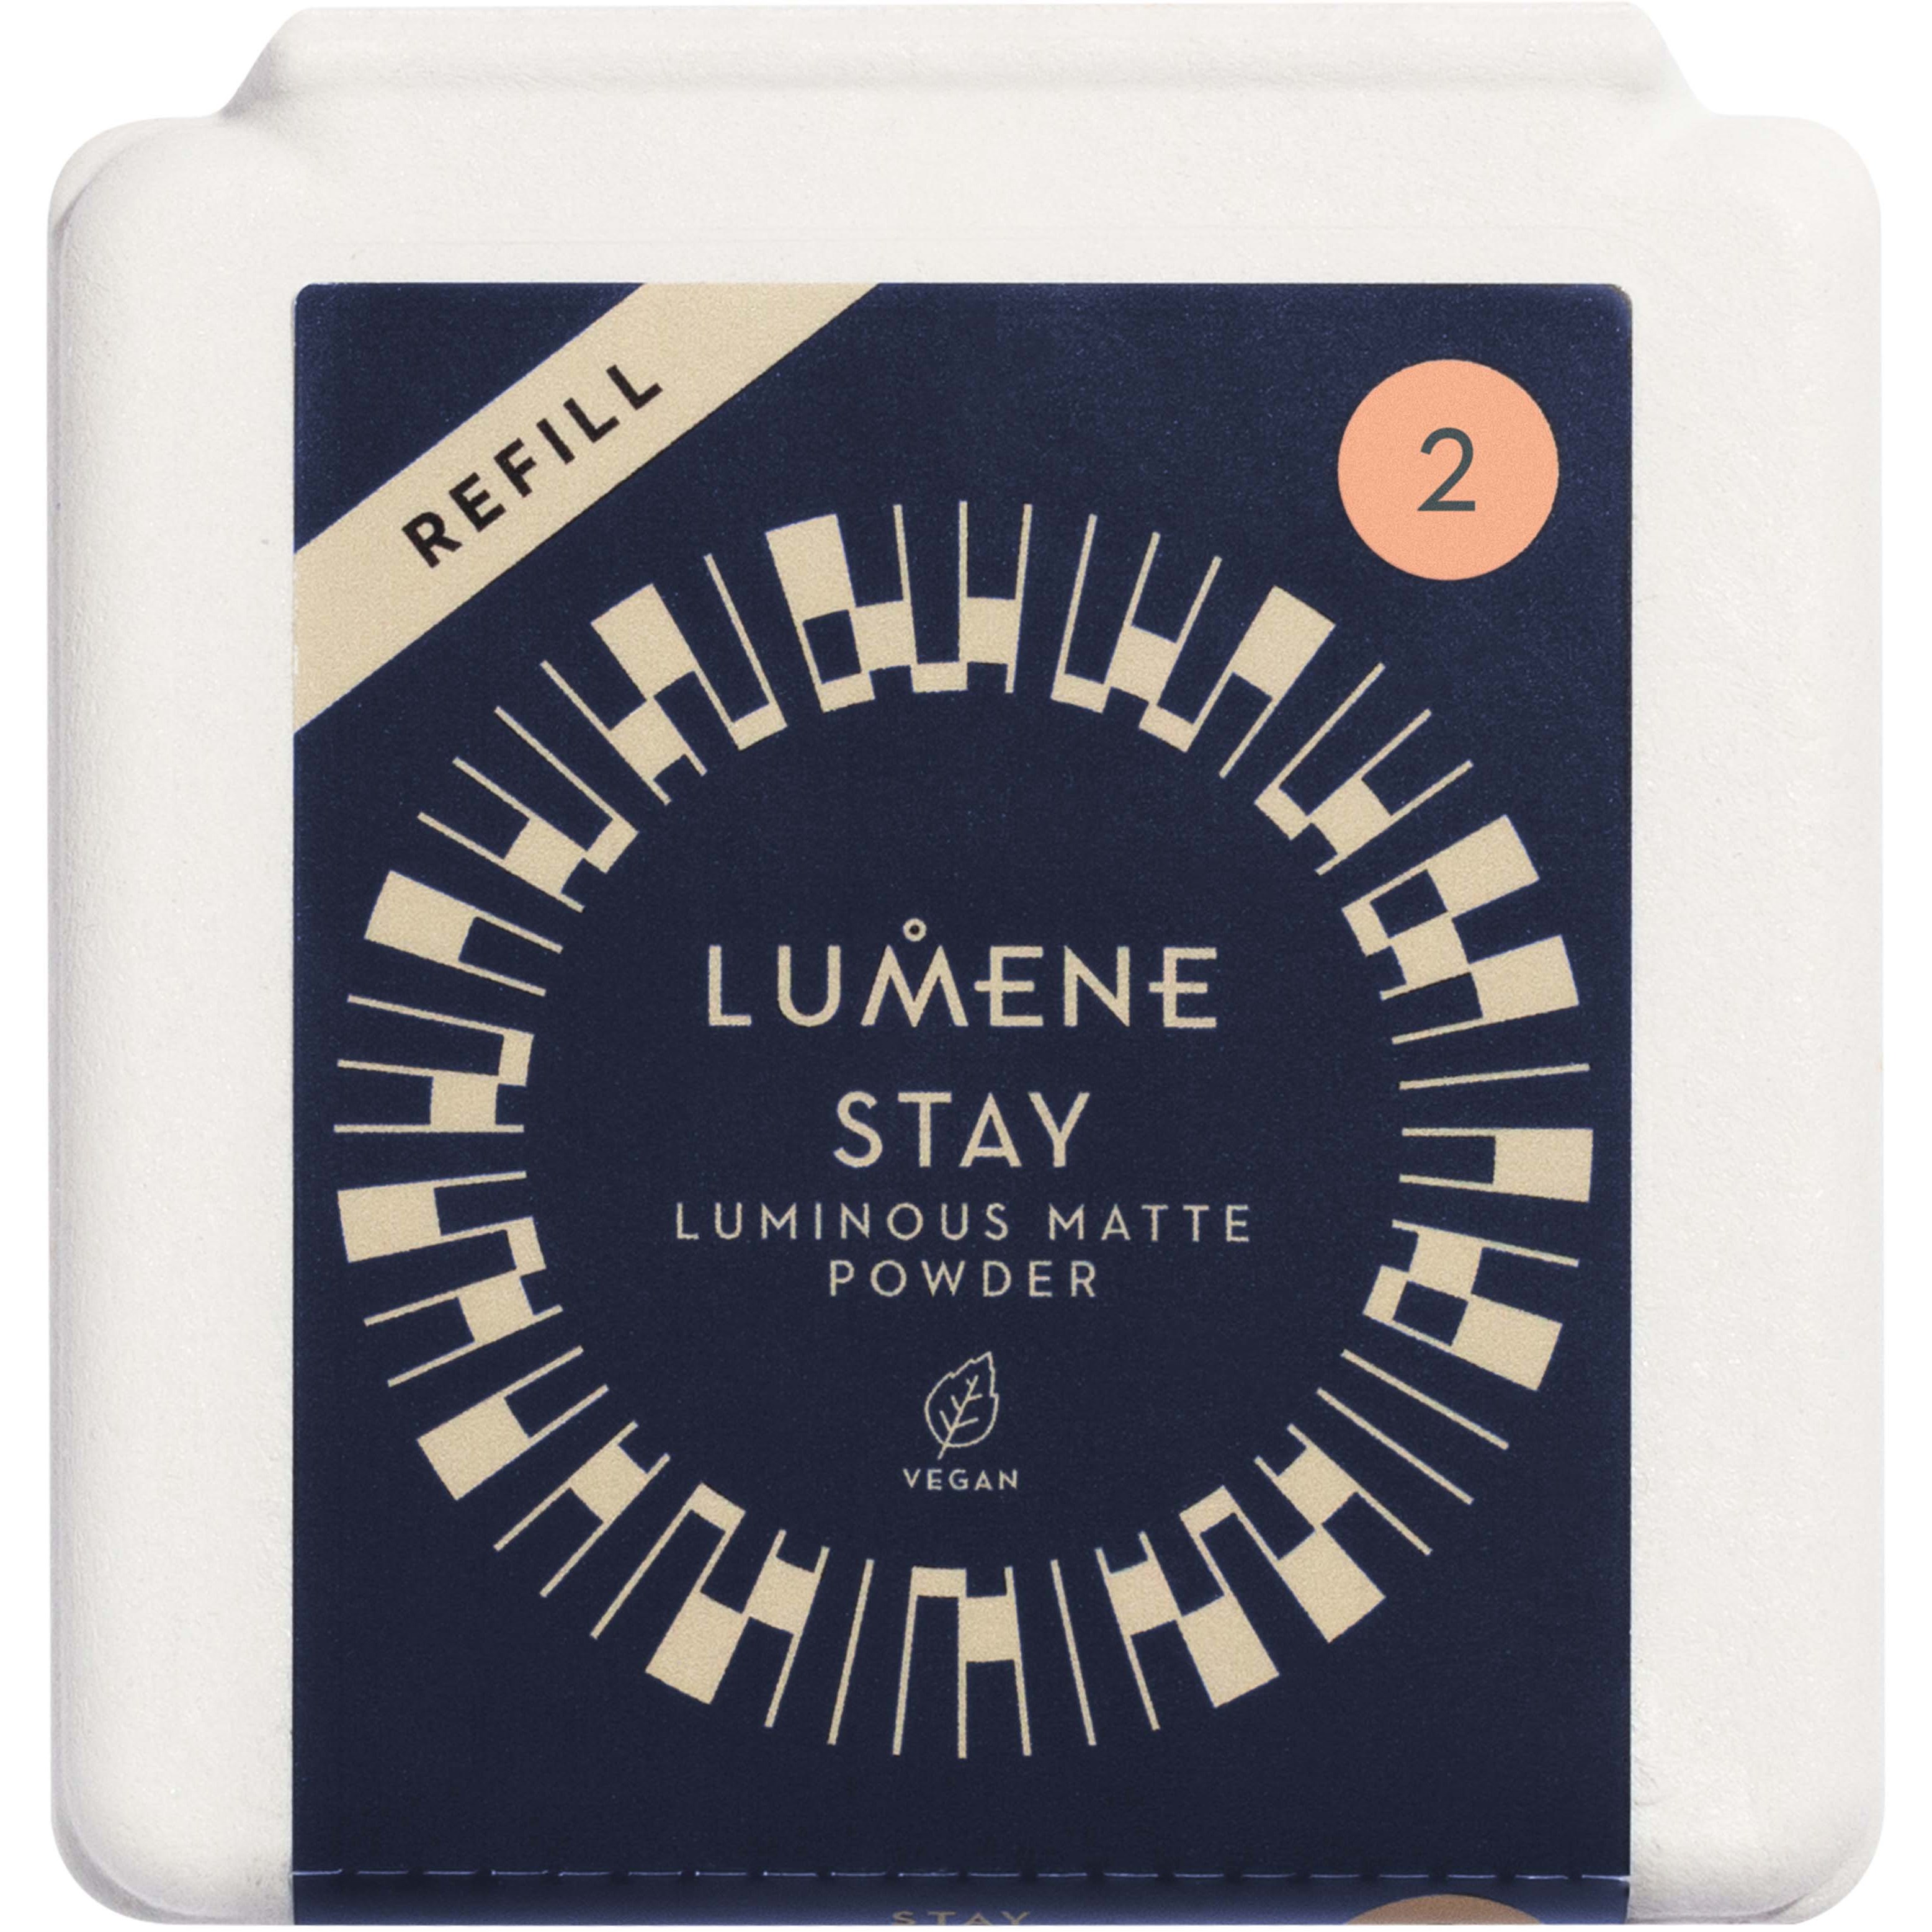 Lumene Stay Luminous Matte Powder Refill 2